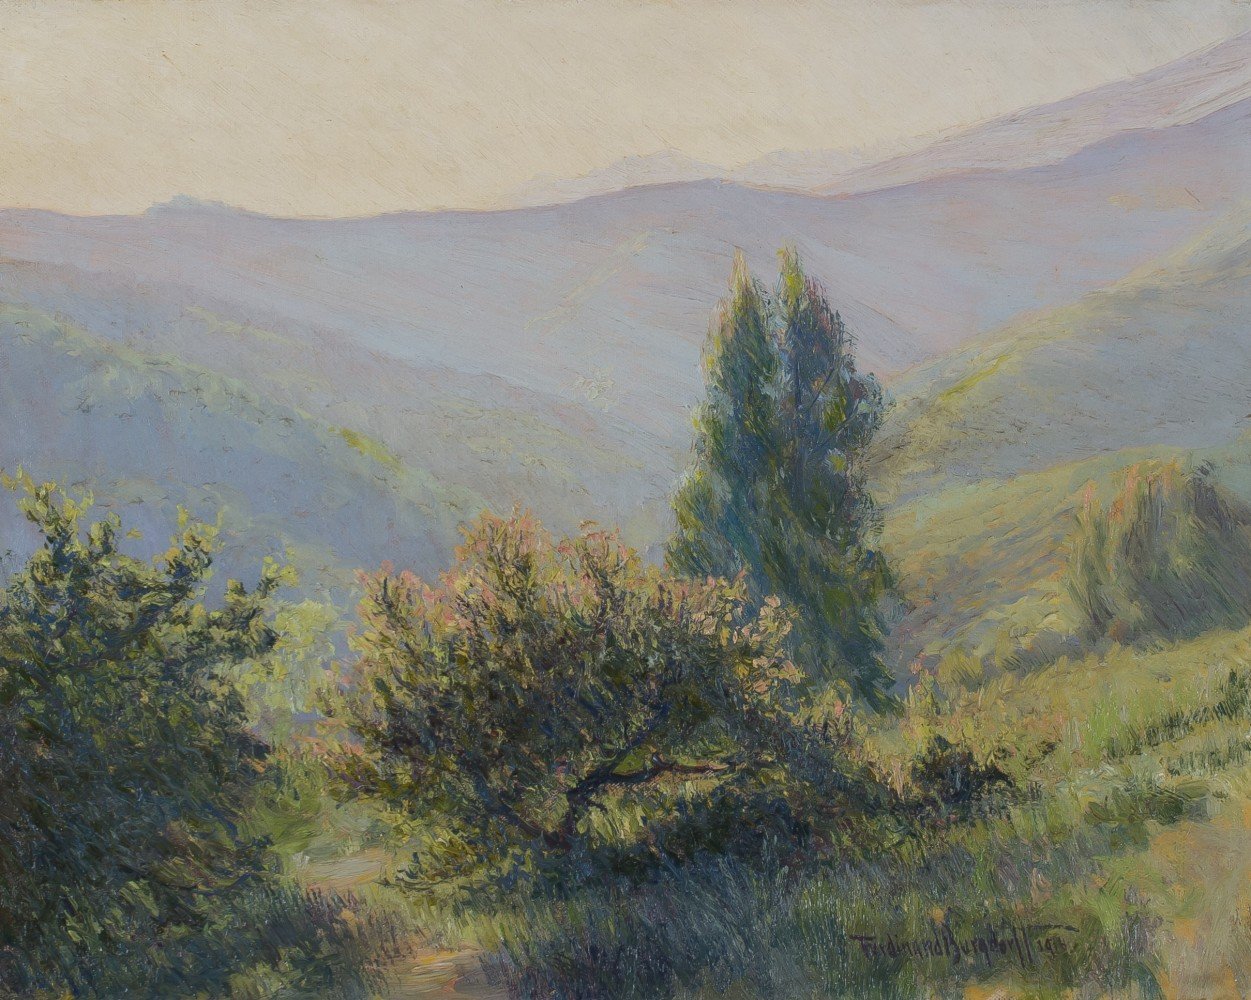 California Hillside at Dusk by Ferdinand Burgdorff